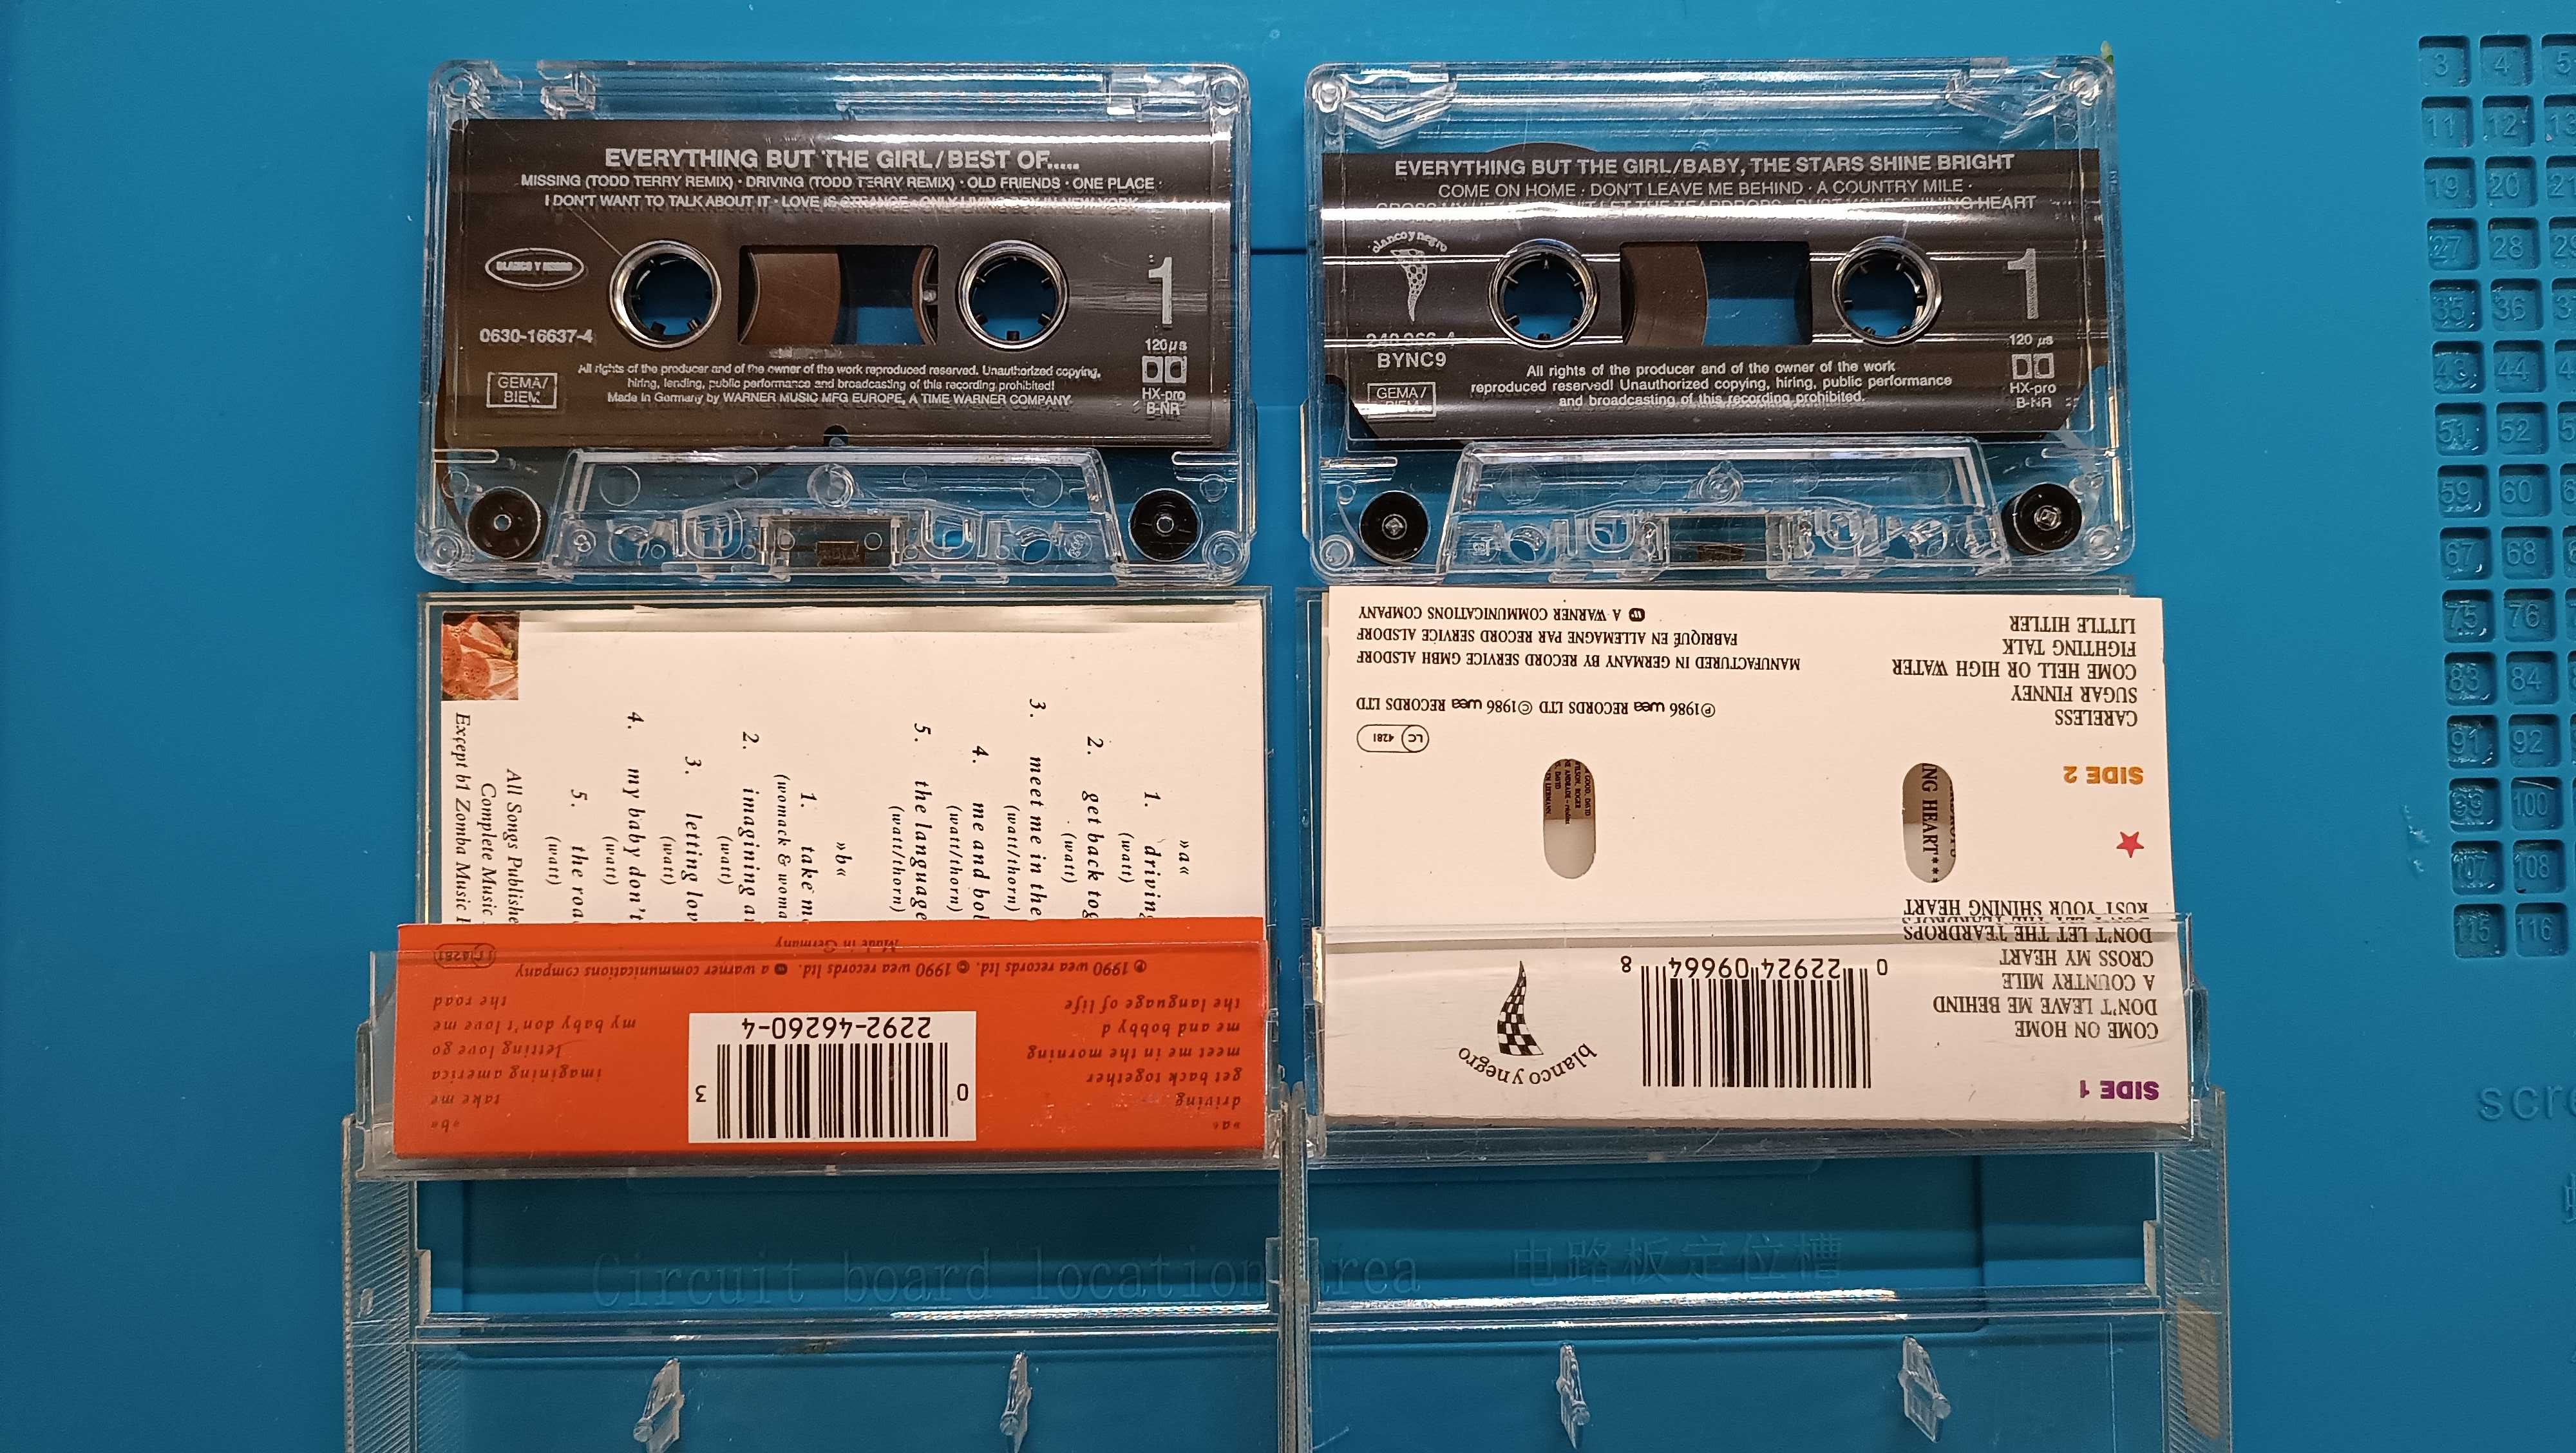 Everything But The Girl студия 2 альбома аудиокасета магнитофон касети